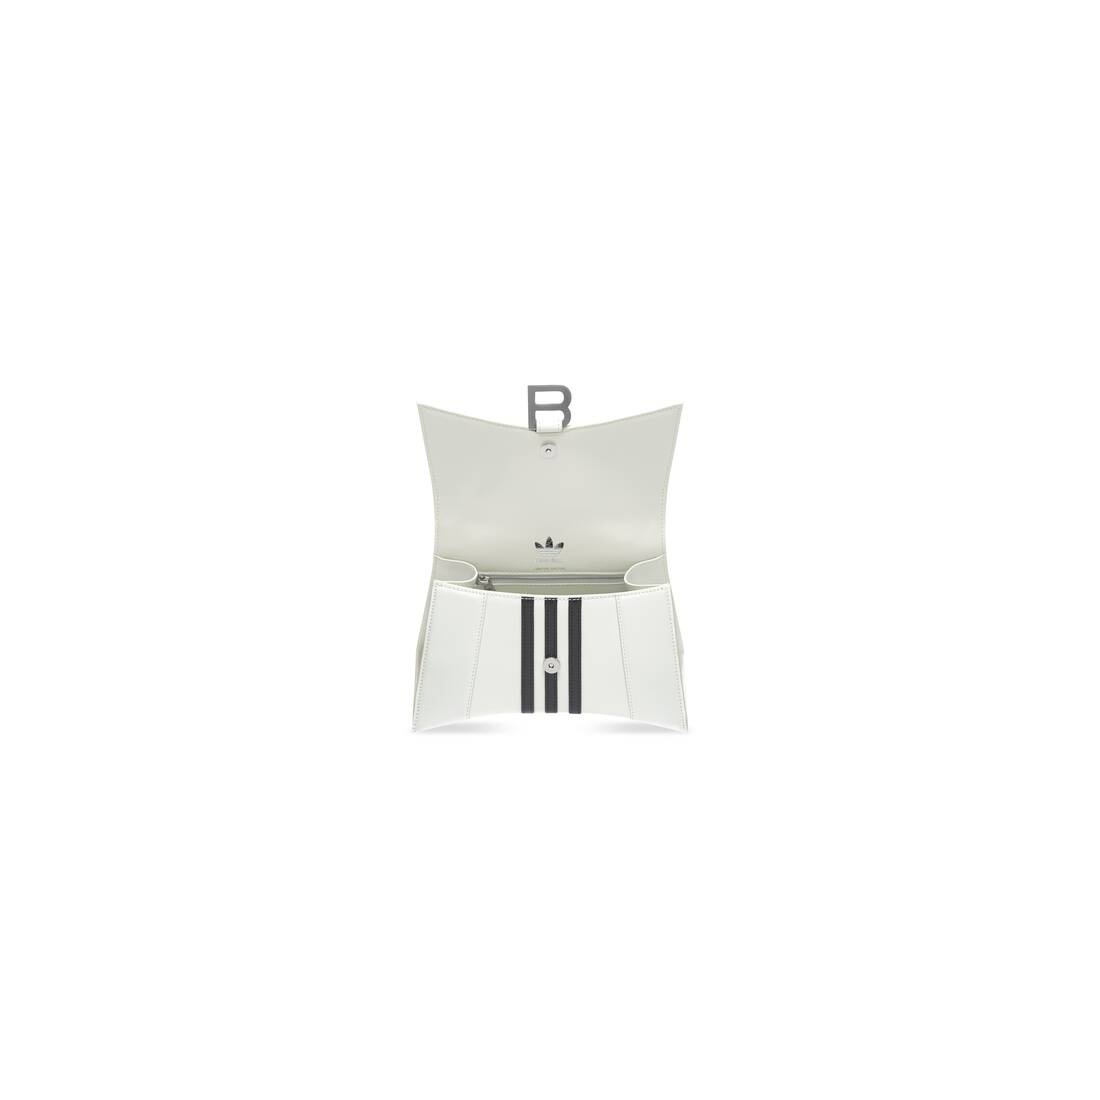 Women's Balenciaga / Adidas Hourglass Small Handbag In Box in Optic White - 5